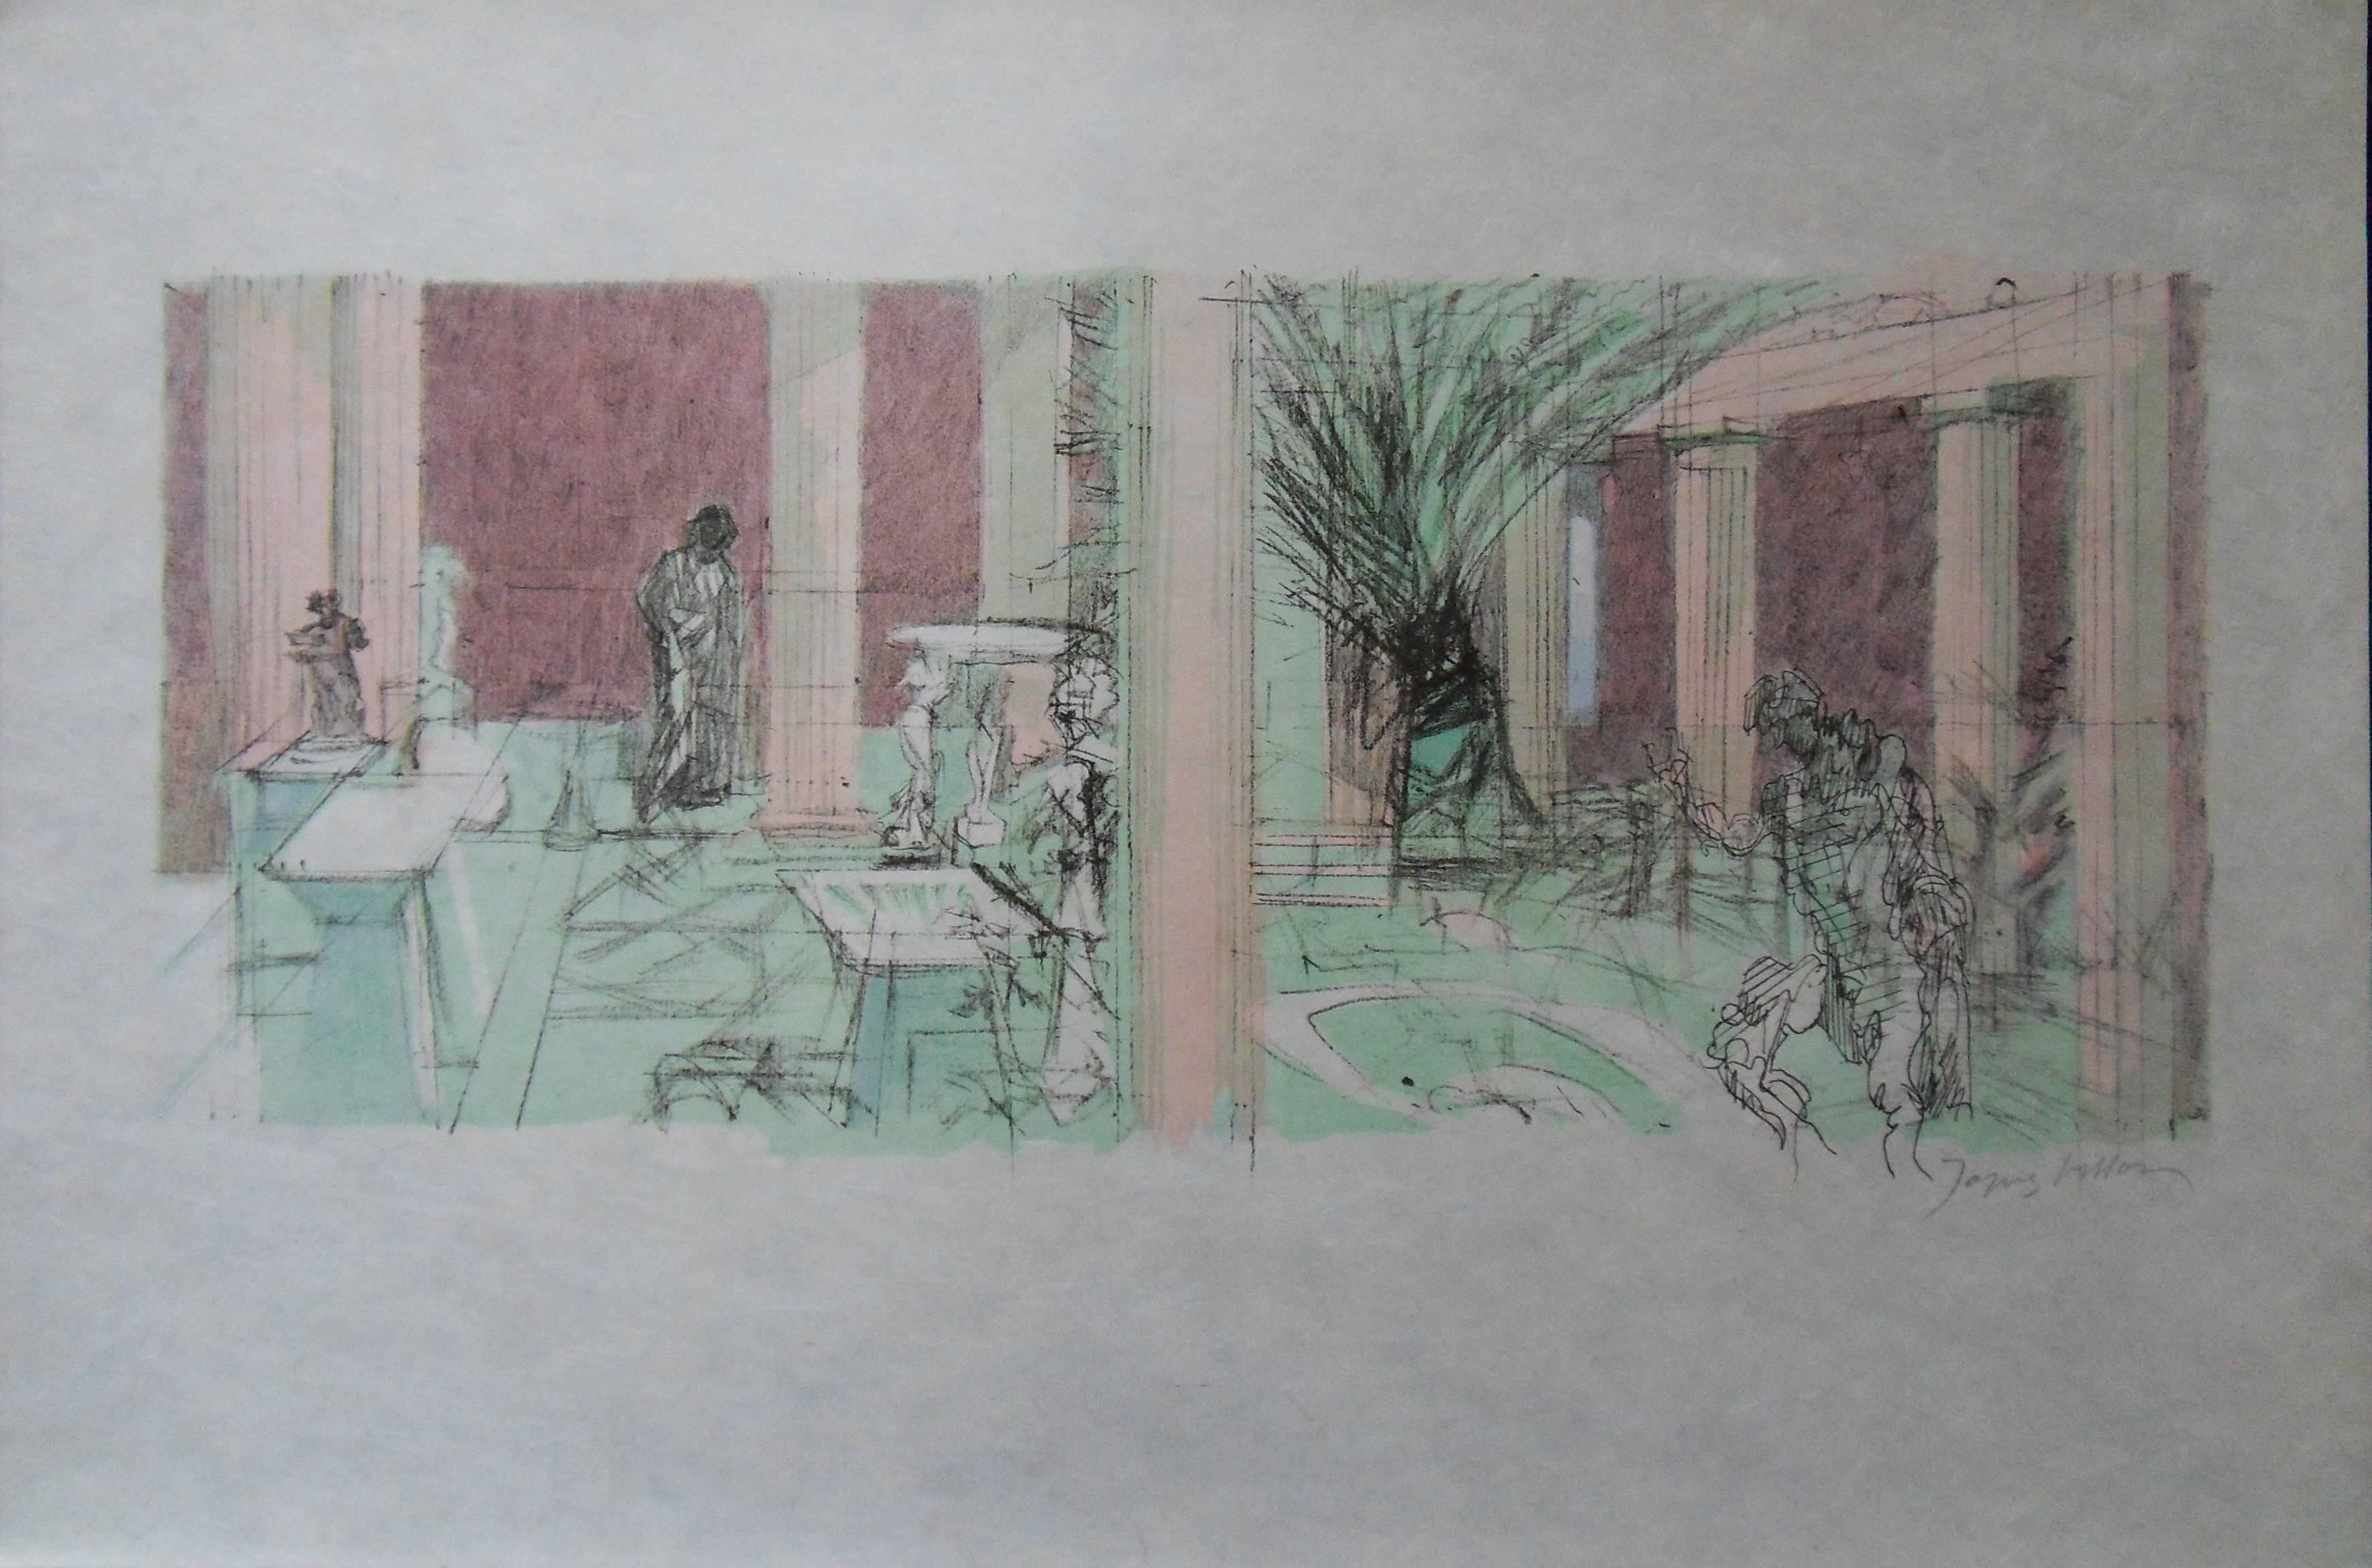 Atrium - Signed lithograph - Mourlot 1953